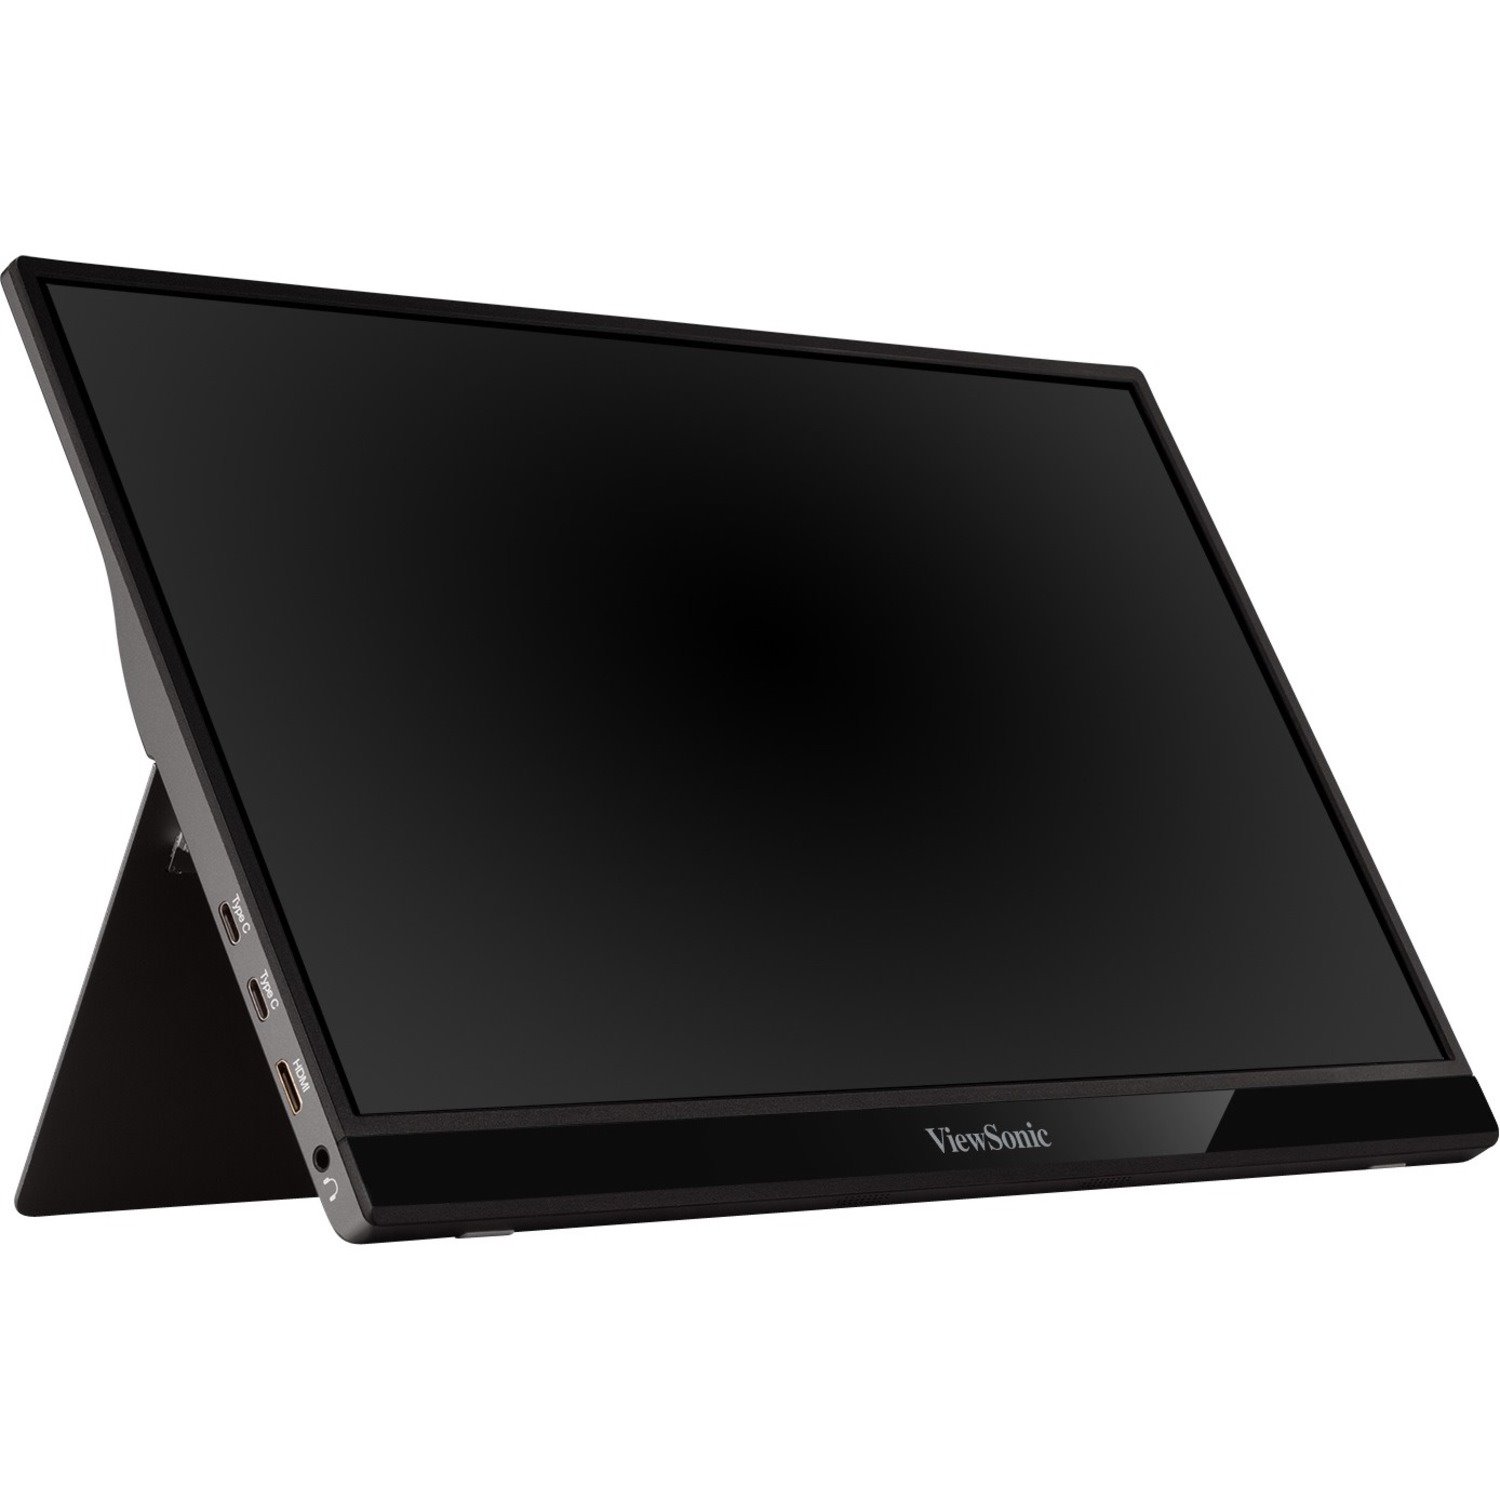 ViewSonic VG1655 15.6" Full HD LED LCD Monitor - 16:9 - Silver